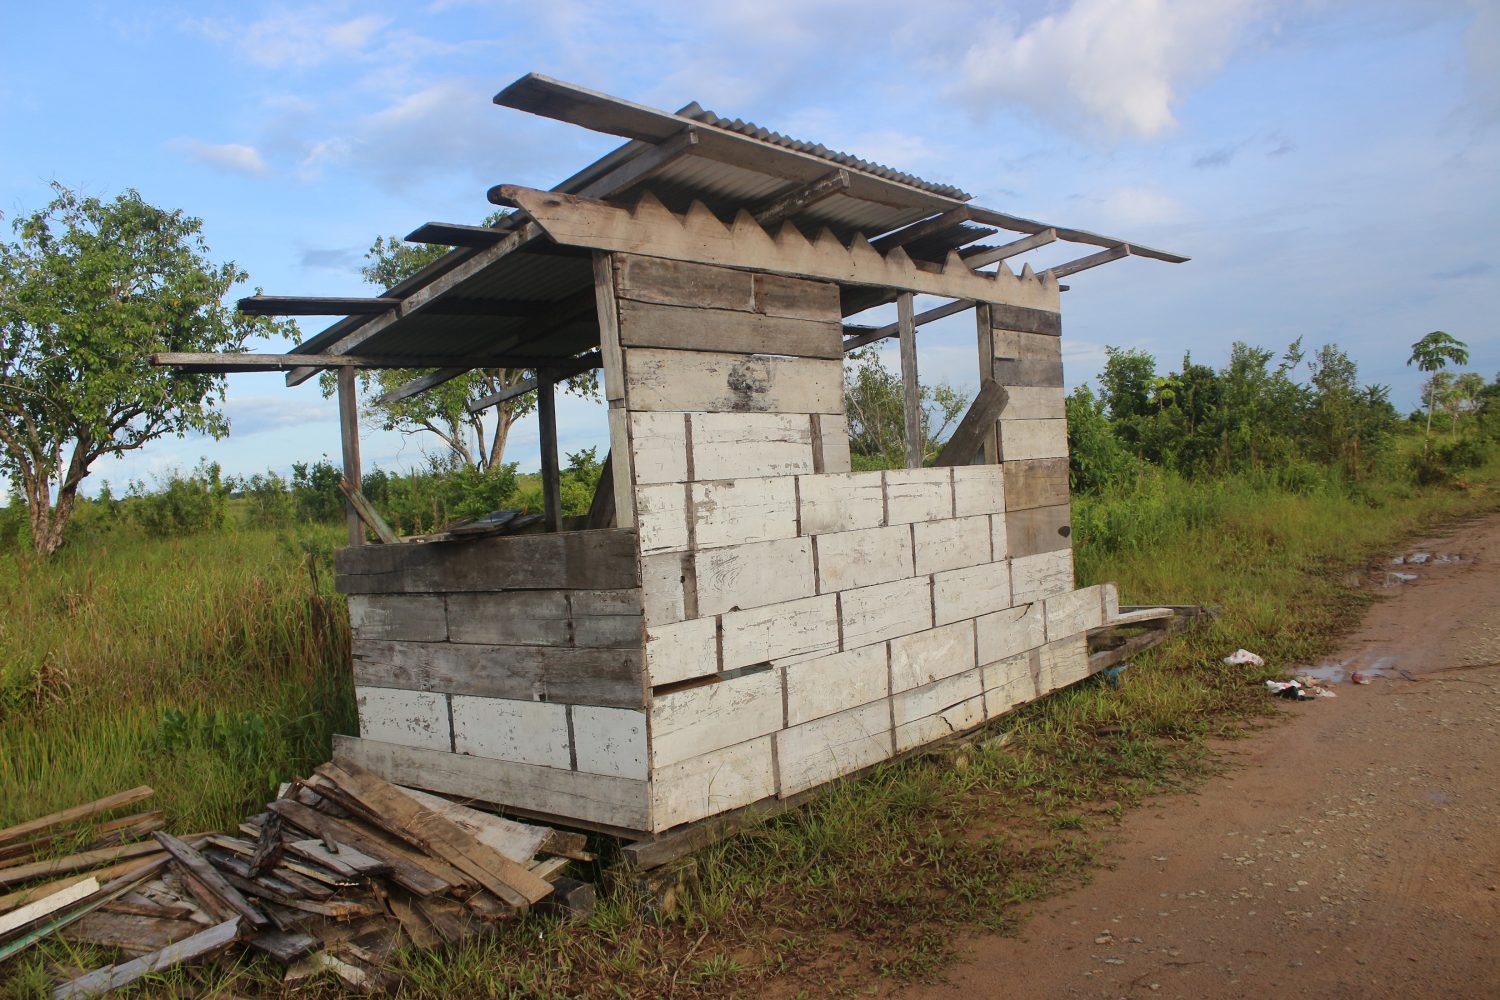 The unfinished shack where Desmond James was captured